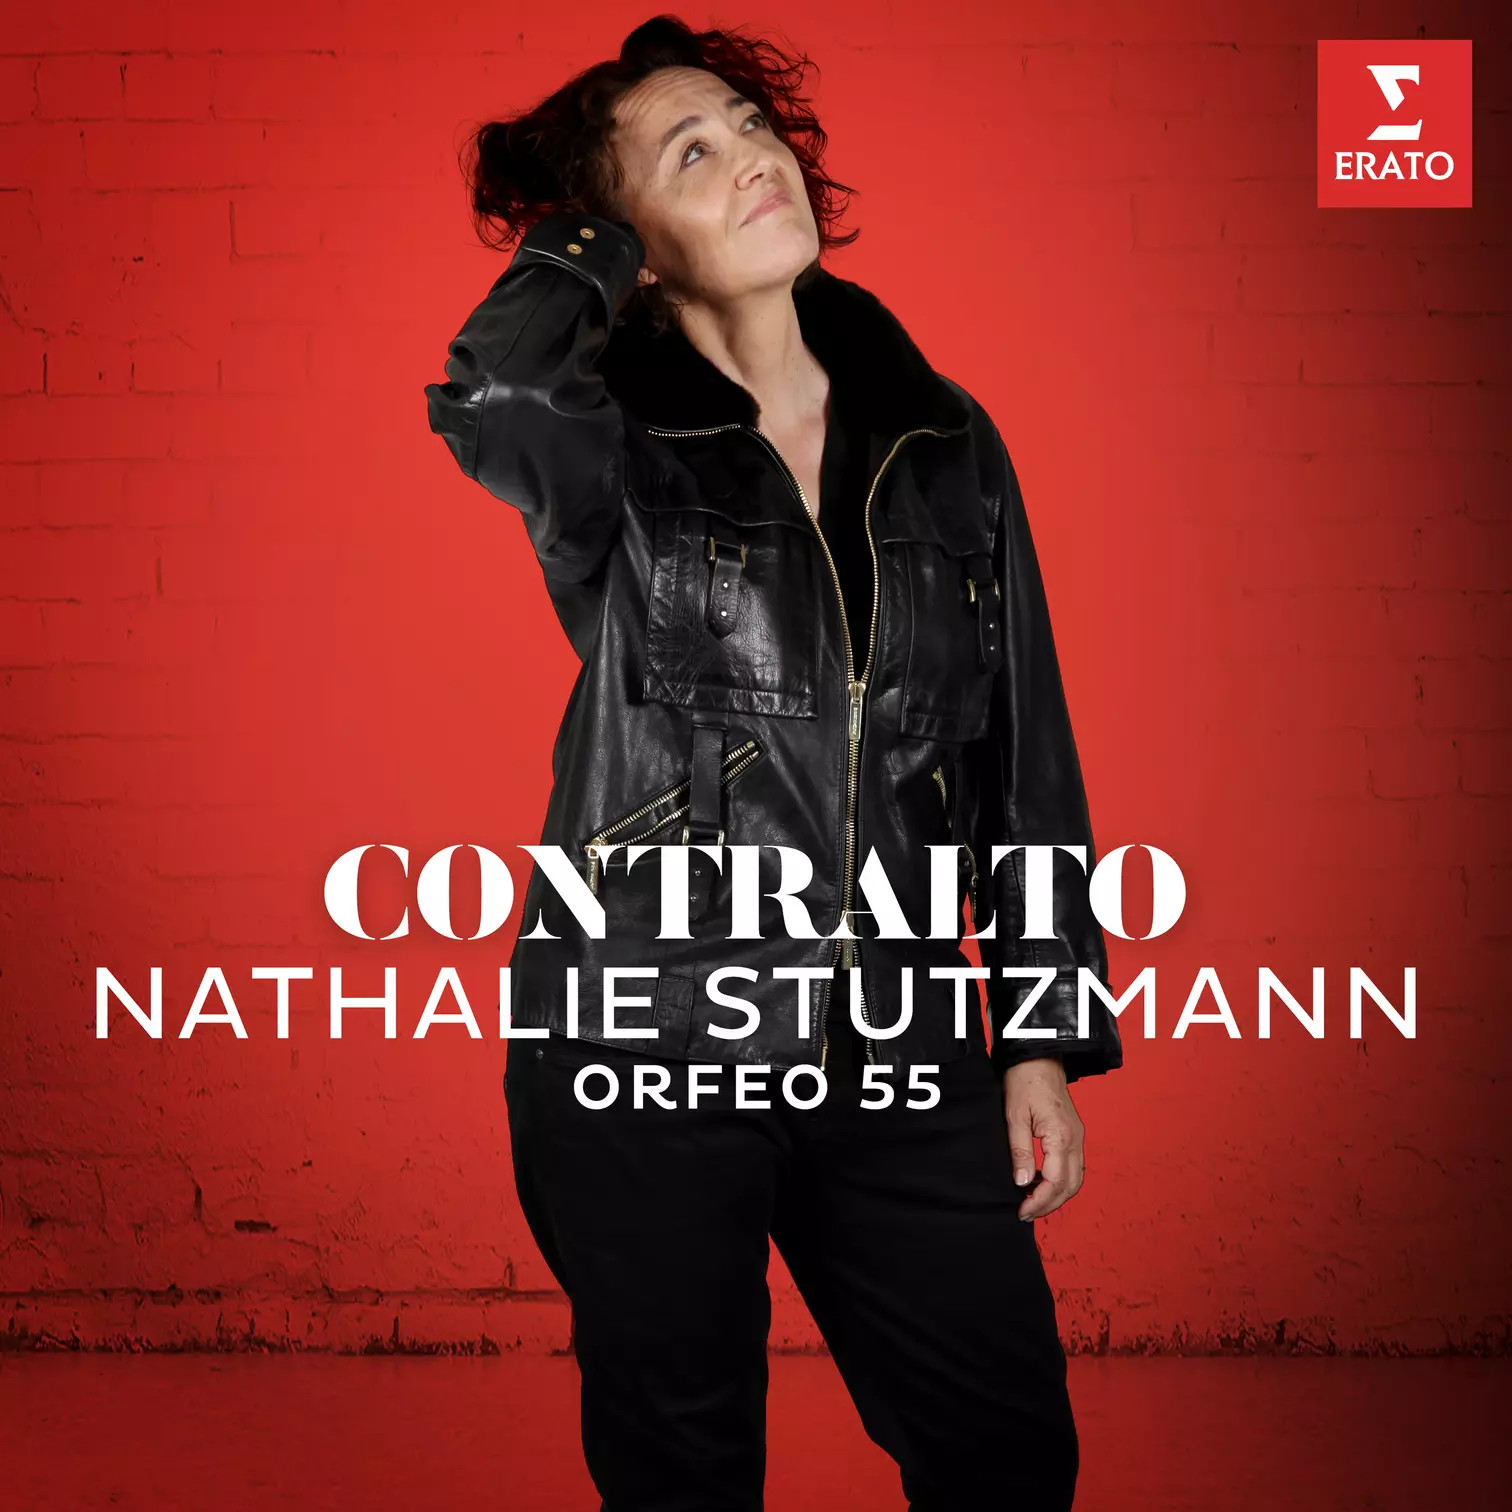 Contralto Nathalie Stutzmann